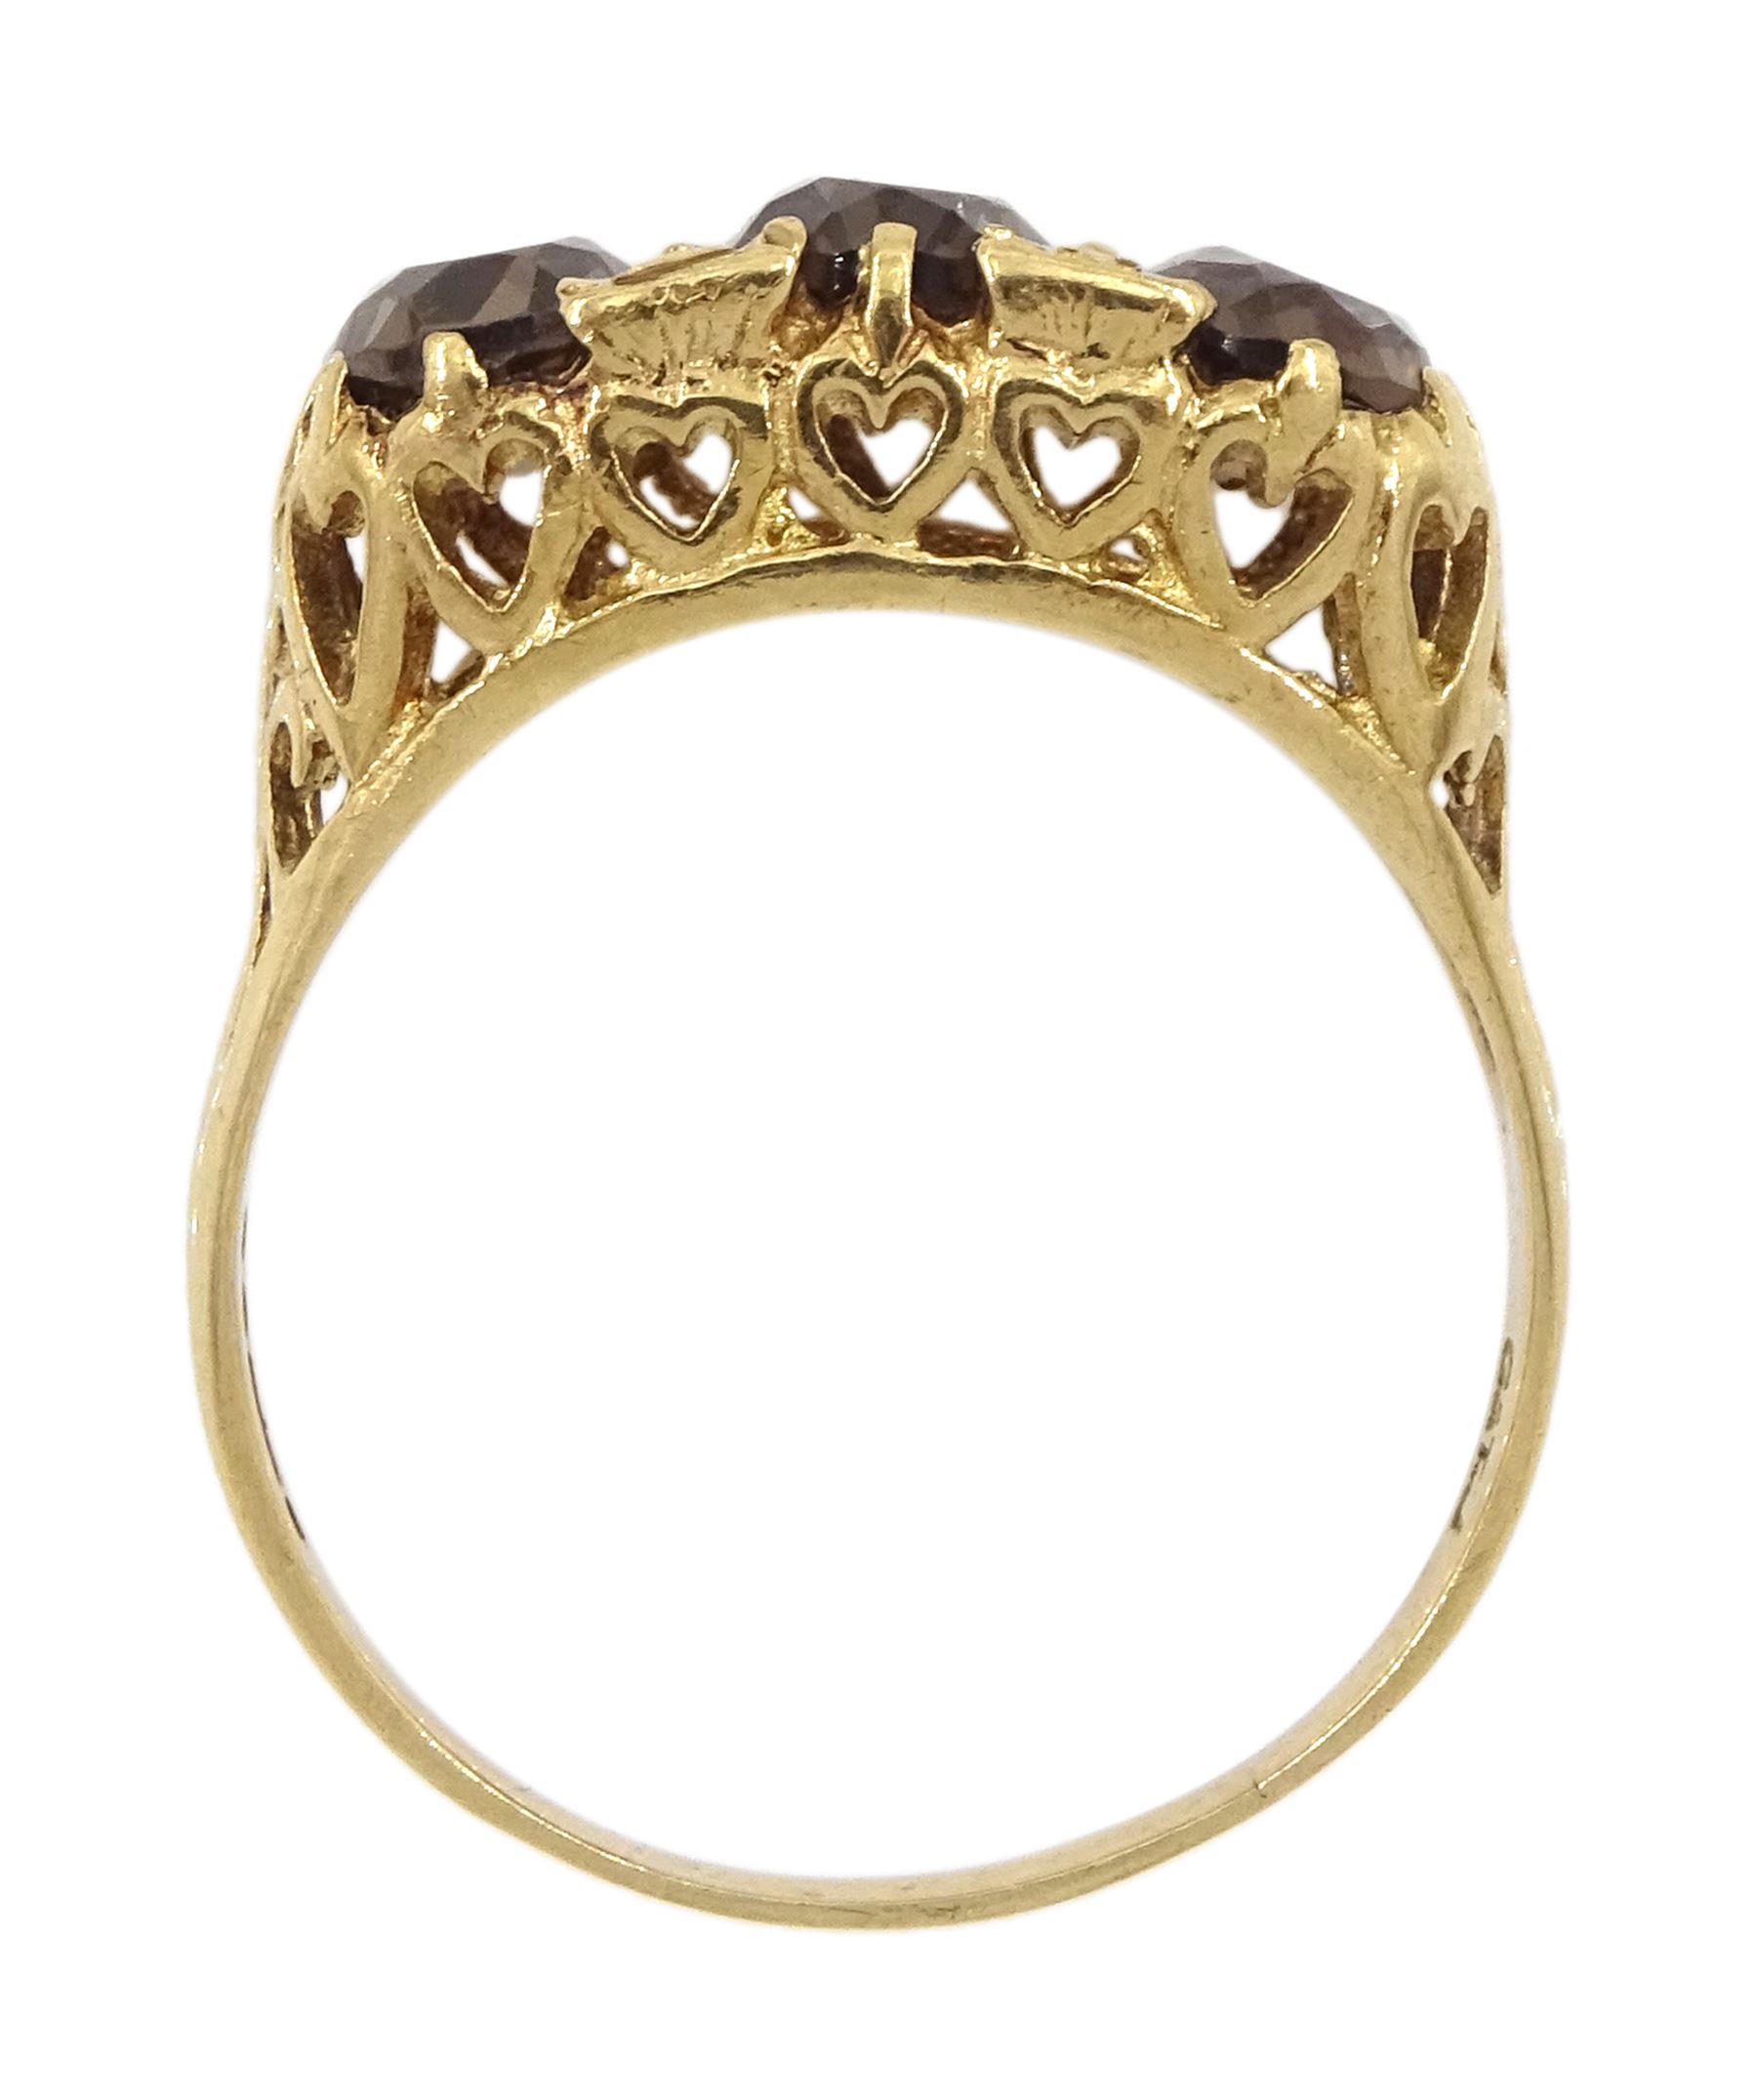 9ct gold three stone oval smoky quartz ring - Image 4 of 4